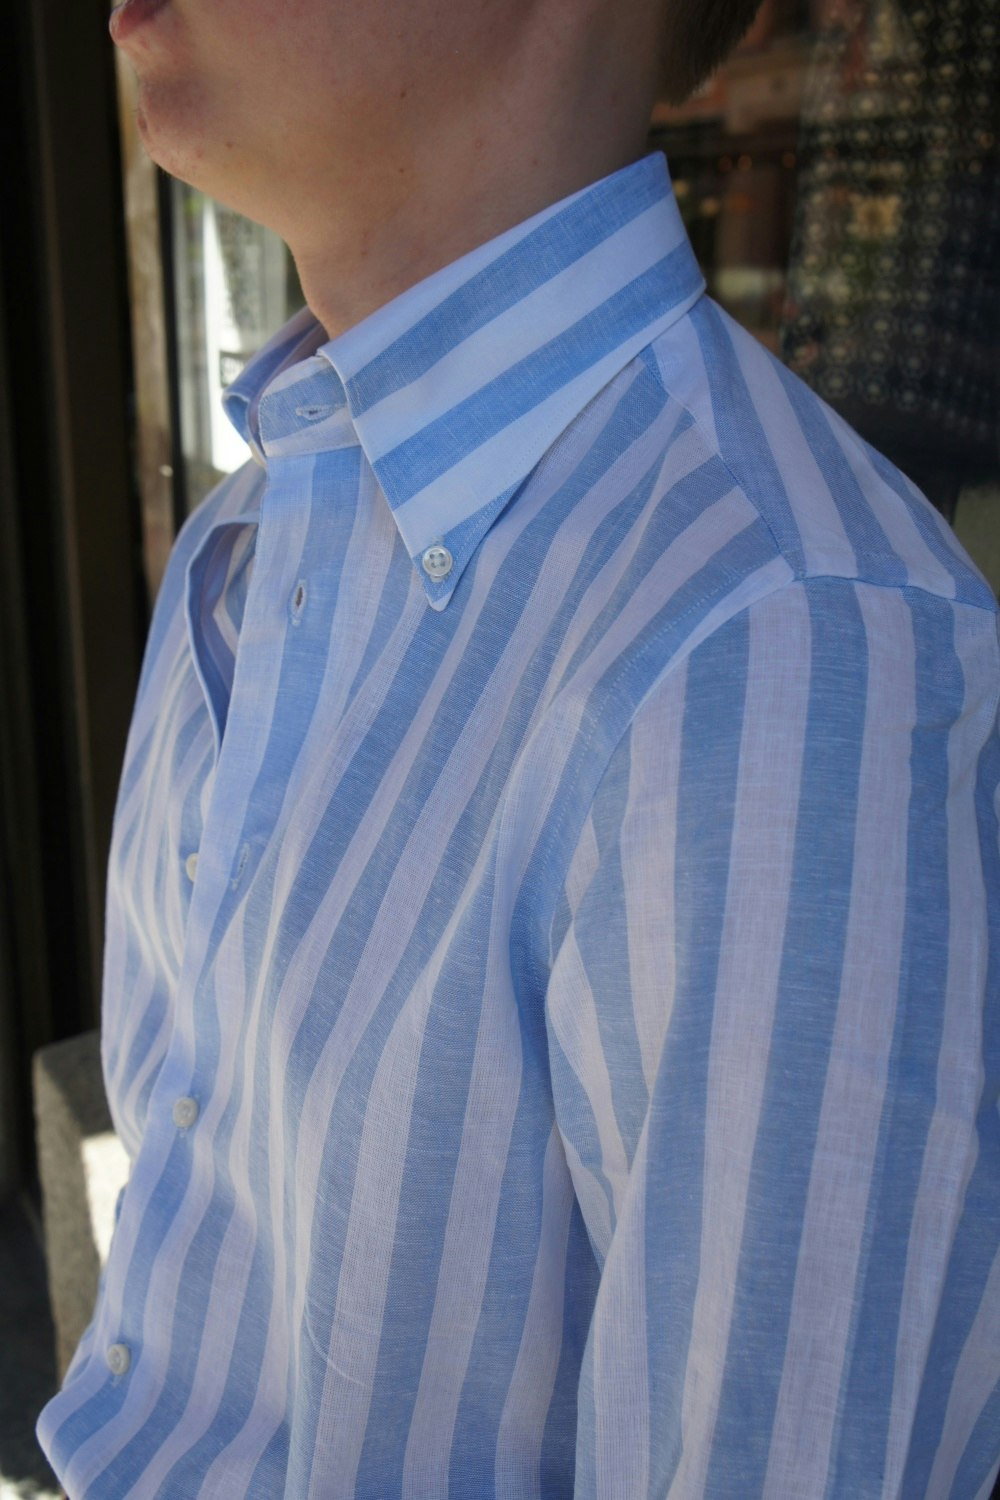 Wide Striped Linen/Cotton Shirt - Button Down - Light Blue/White